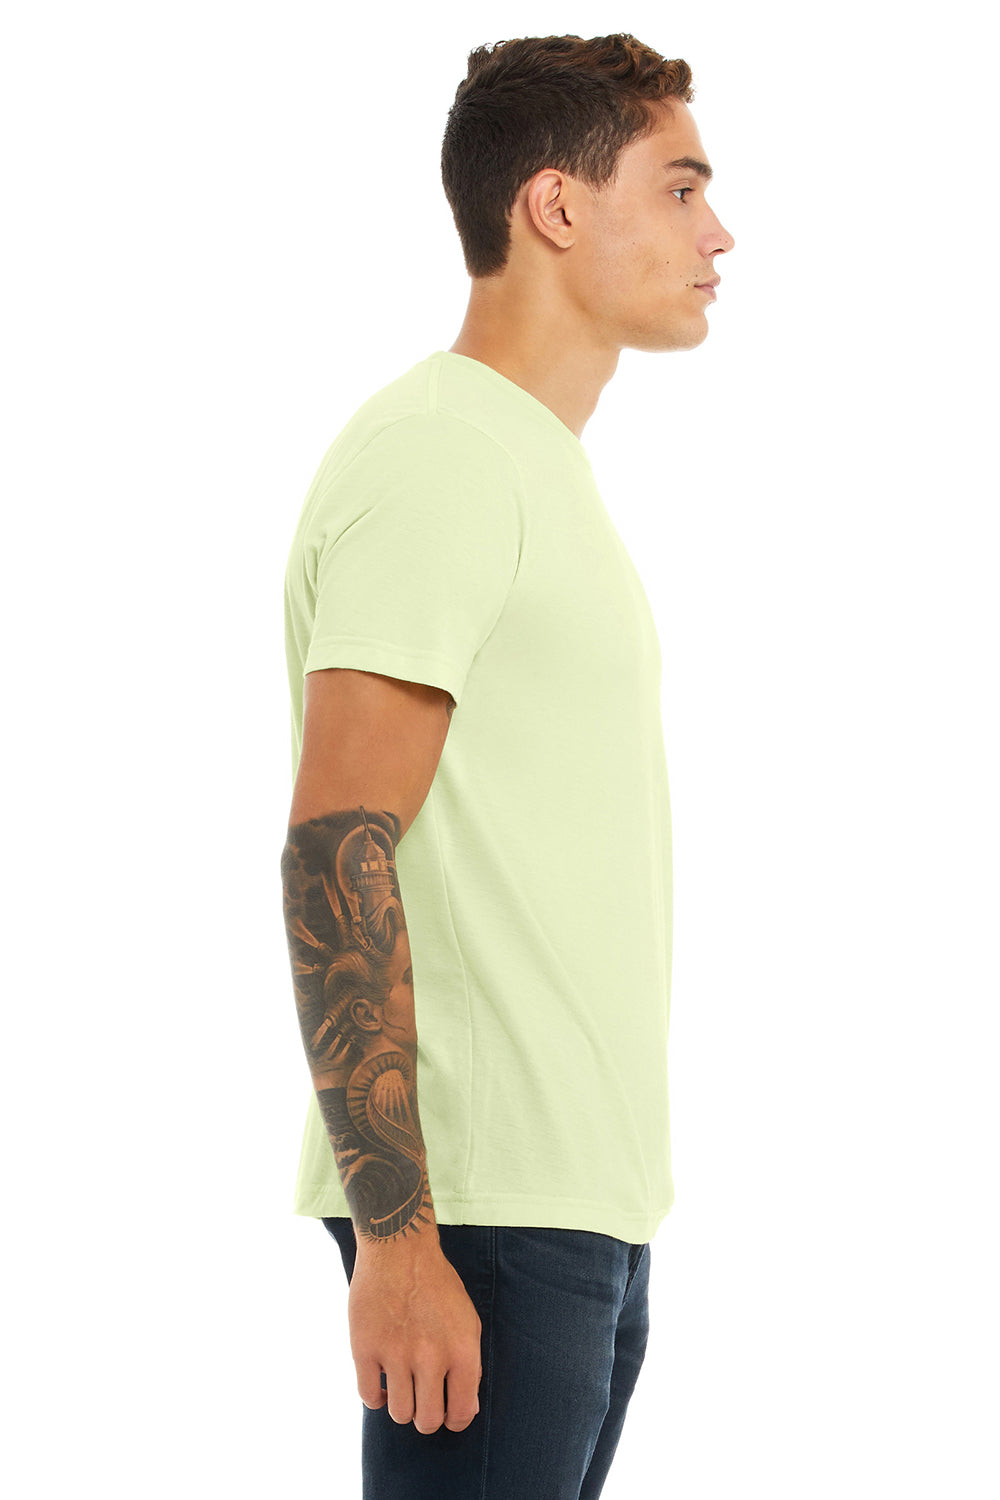 Bella + Canvas BC3413/3413C/3413 Mens Short Sleeve Crewneck T-Shirt Spring Green Model Side